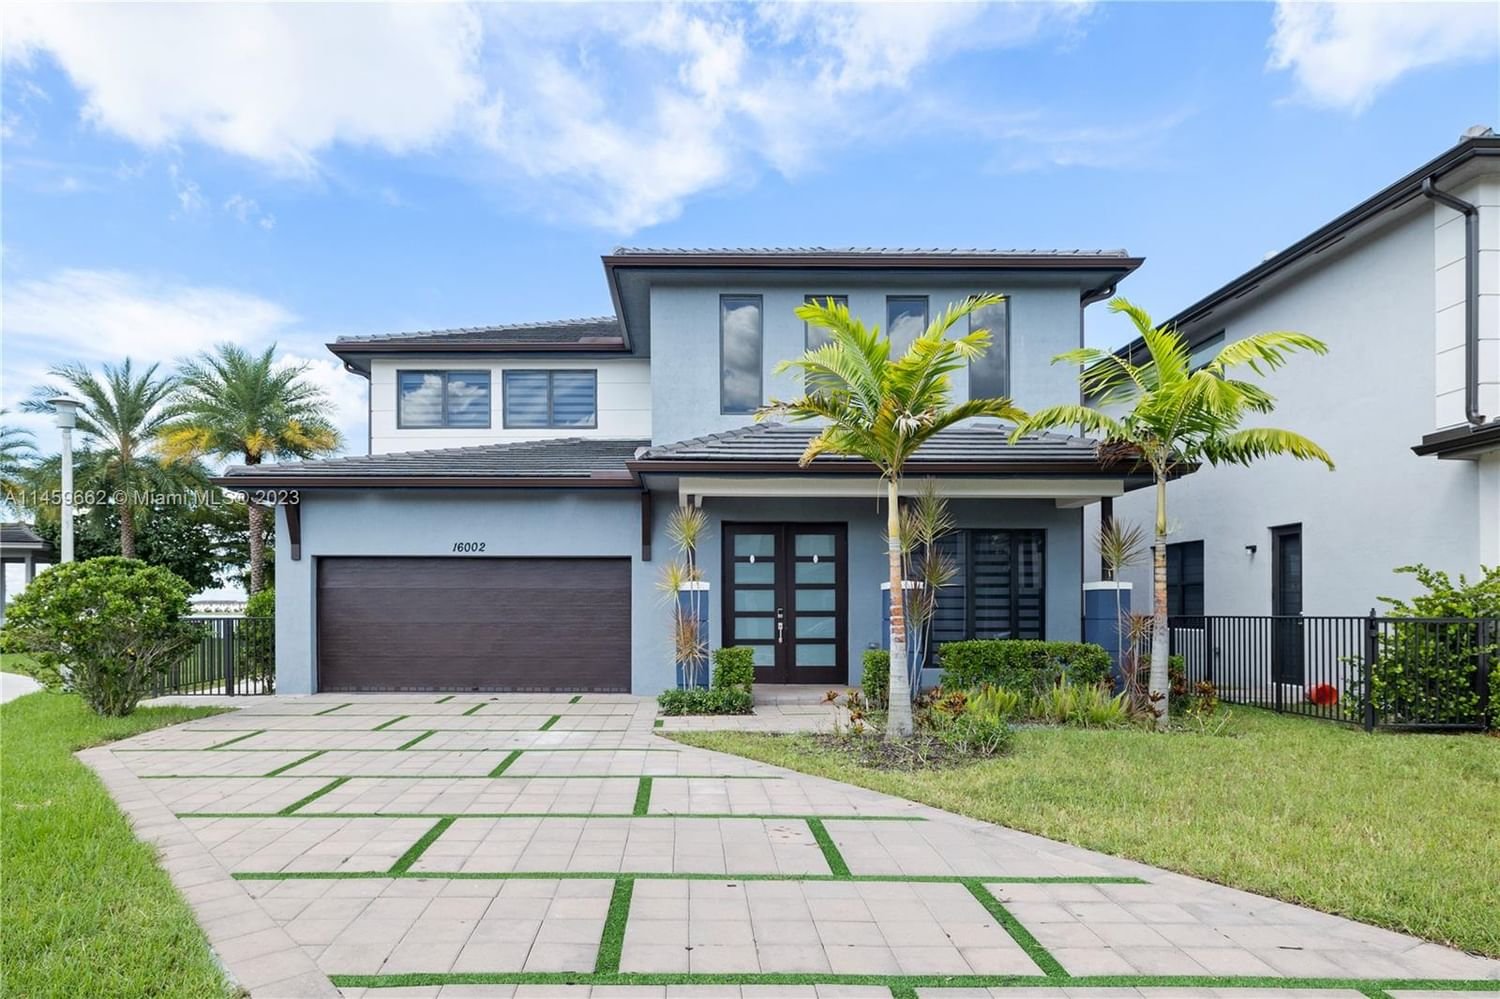 Real estate property located at 16002 87th Ct, Miami-Dade County, Miami Lakes, FL